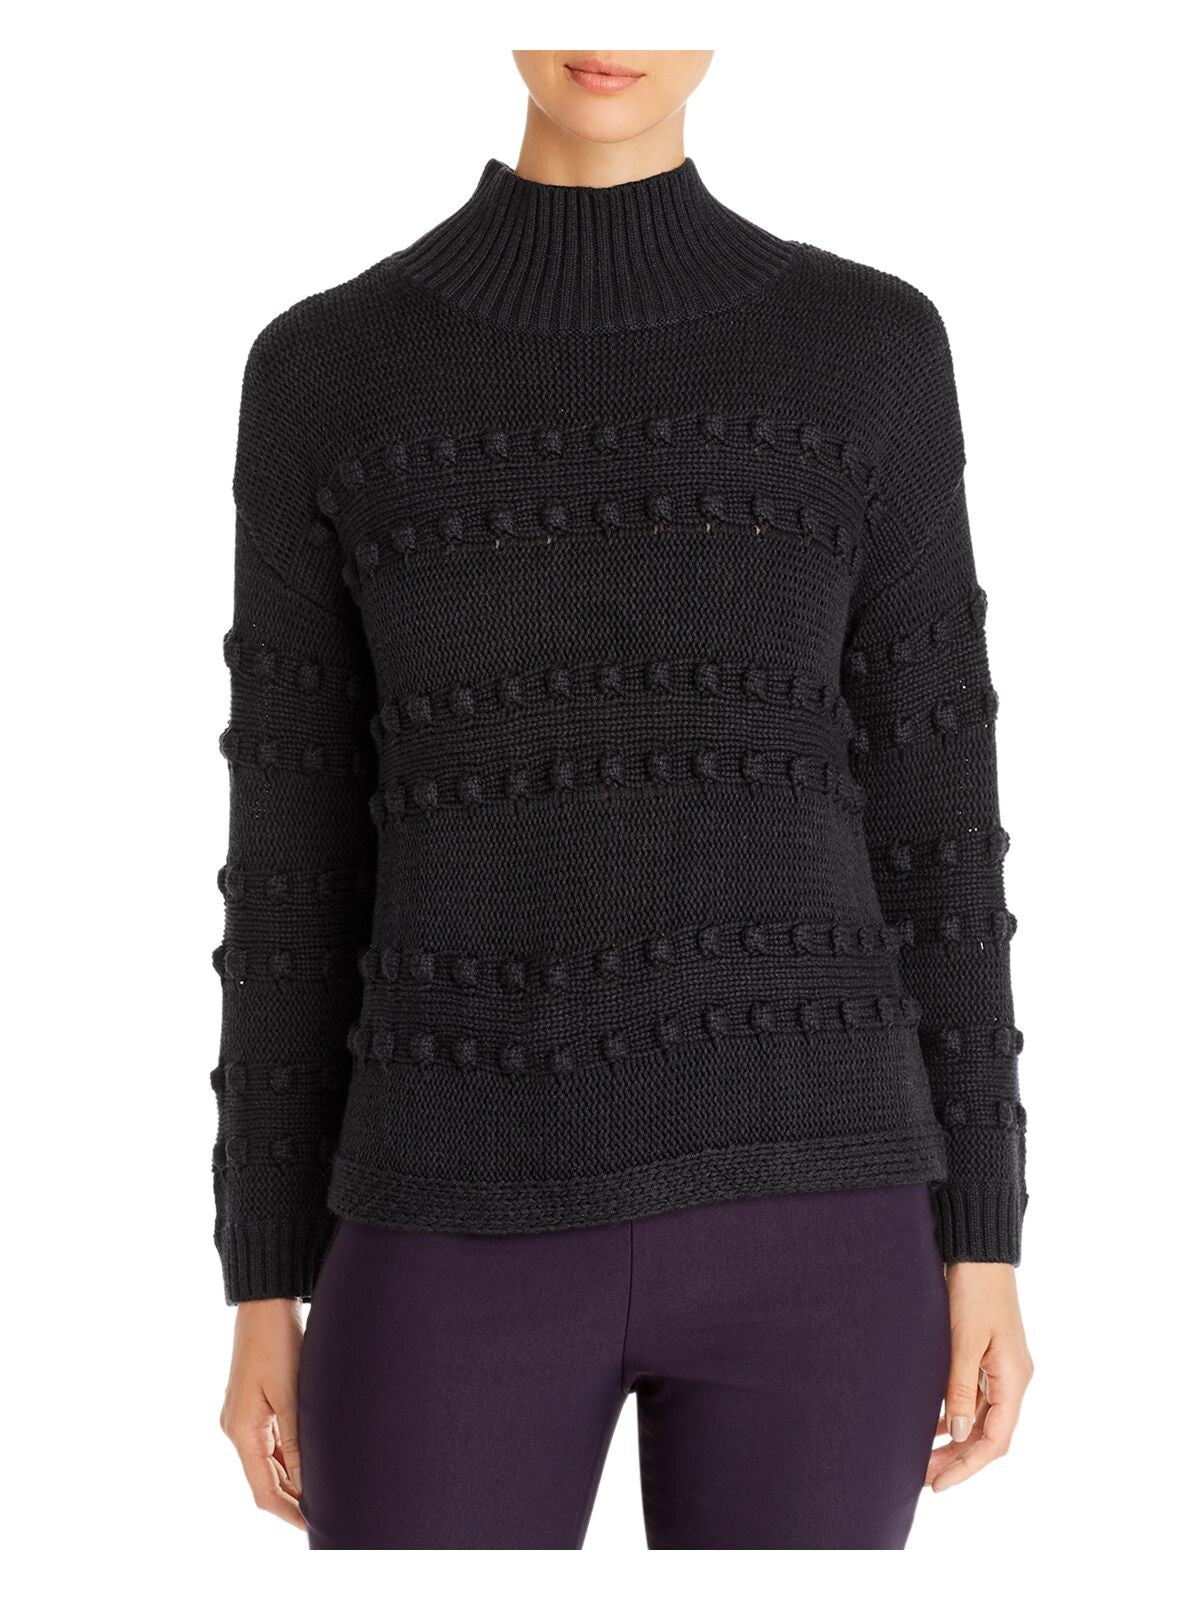 NIC+ZOE Womens Black Textured Mock Neck Long Sleeve Sweater 2XL